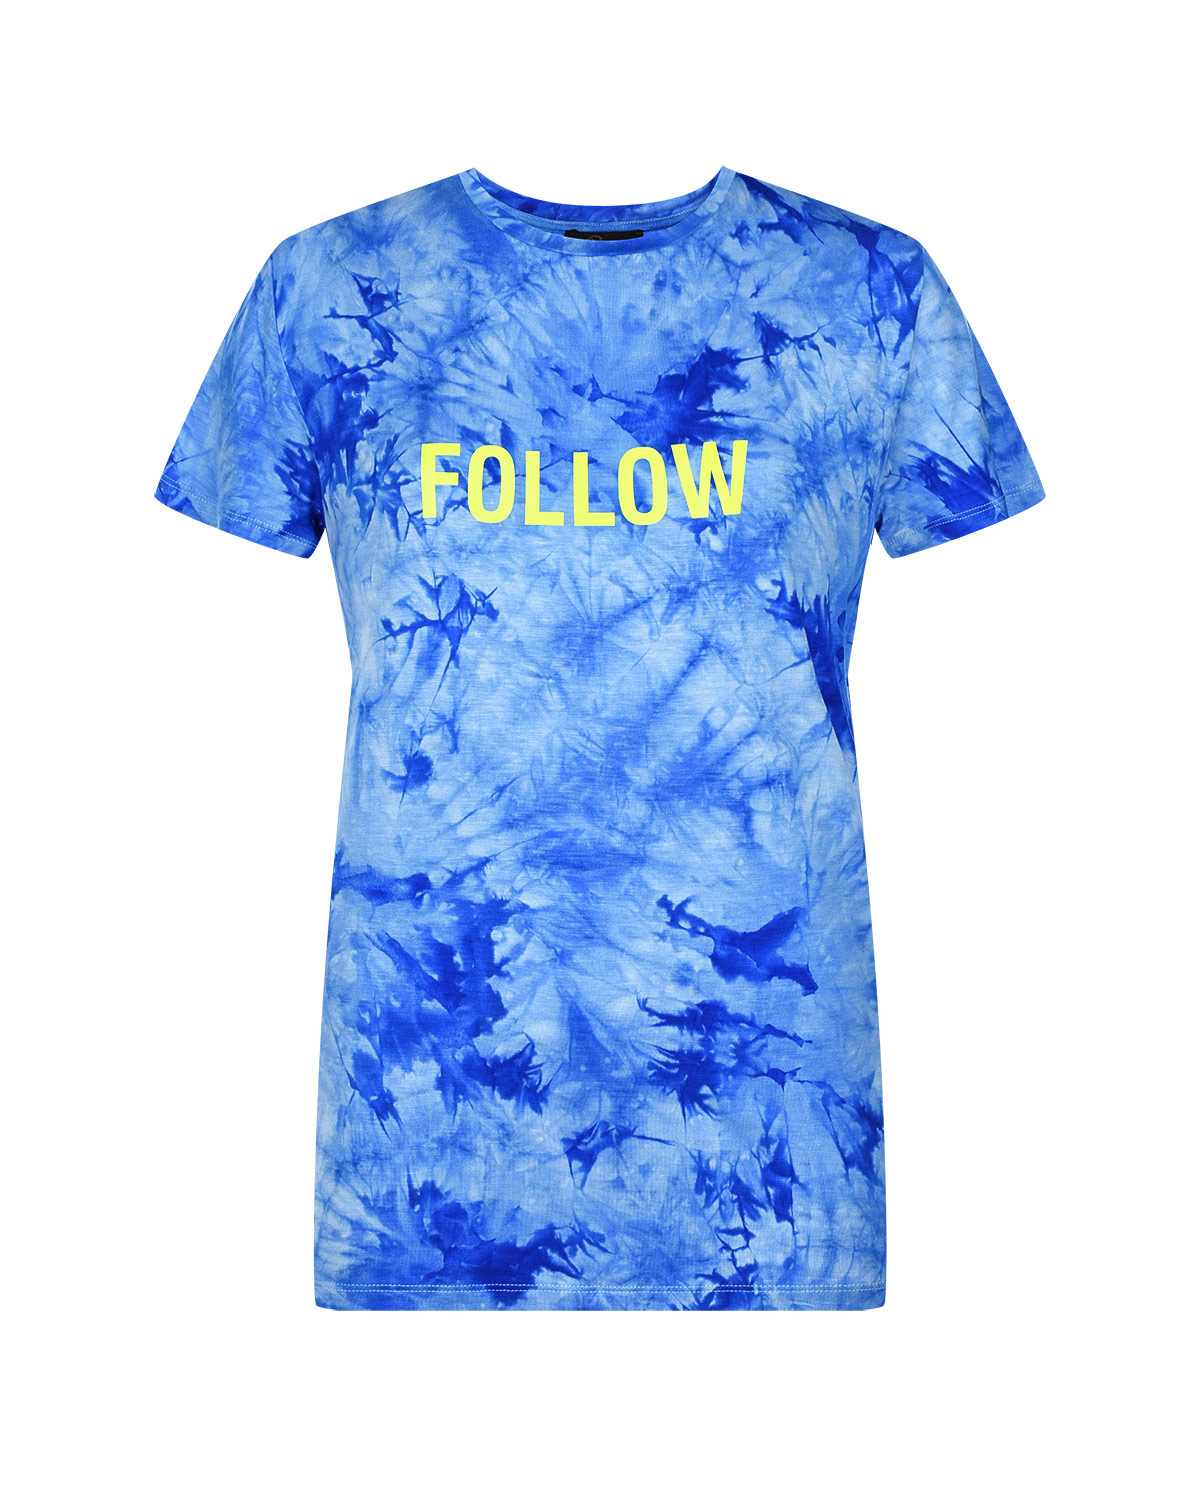 Синяя футболка с надписью "FOLLOW" Dan Maralex, размер 44, цвет нет цвета